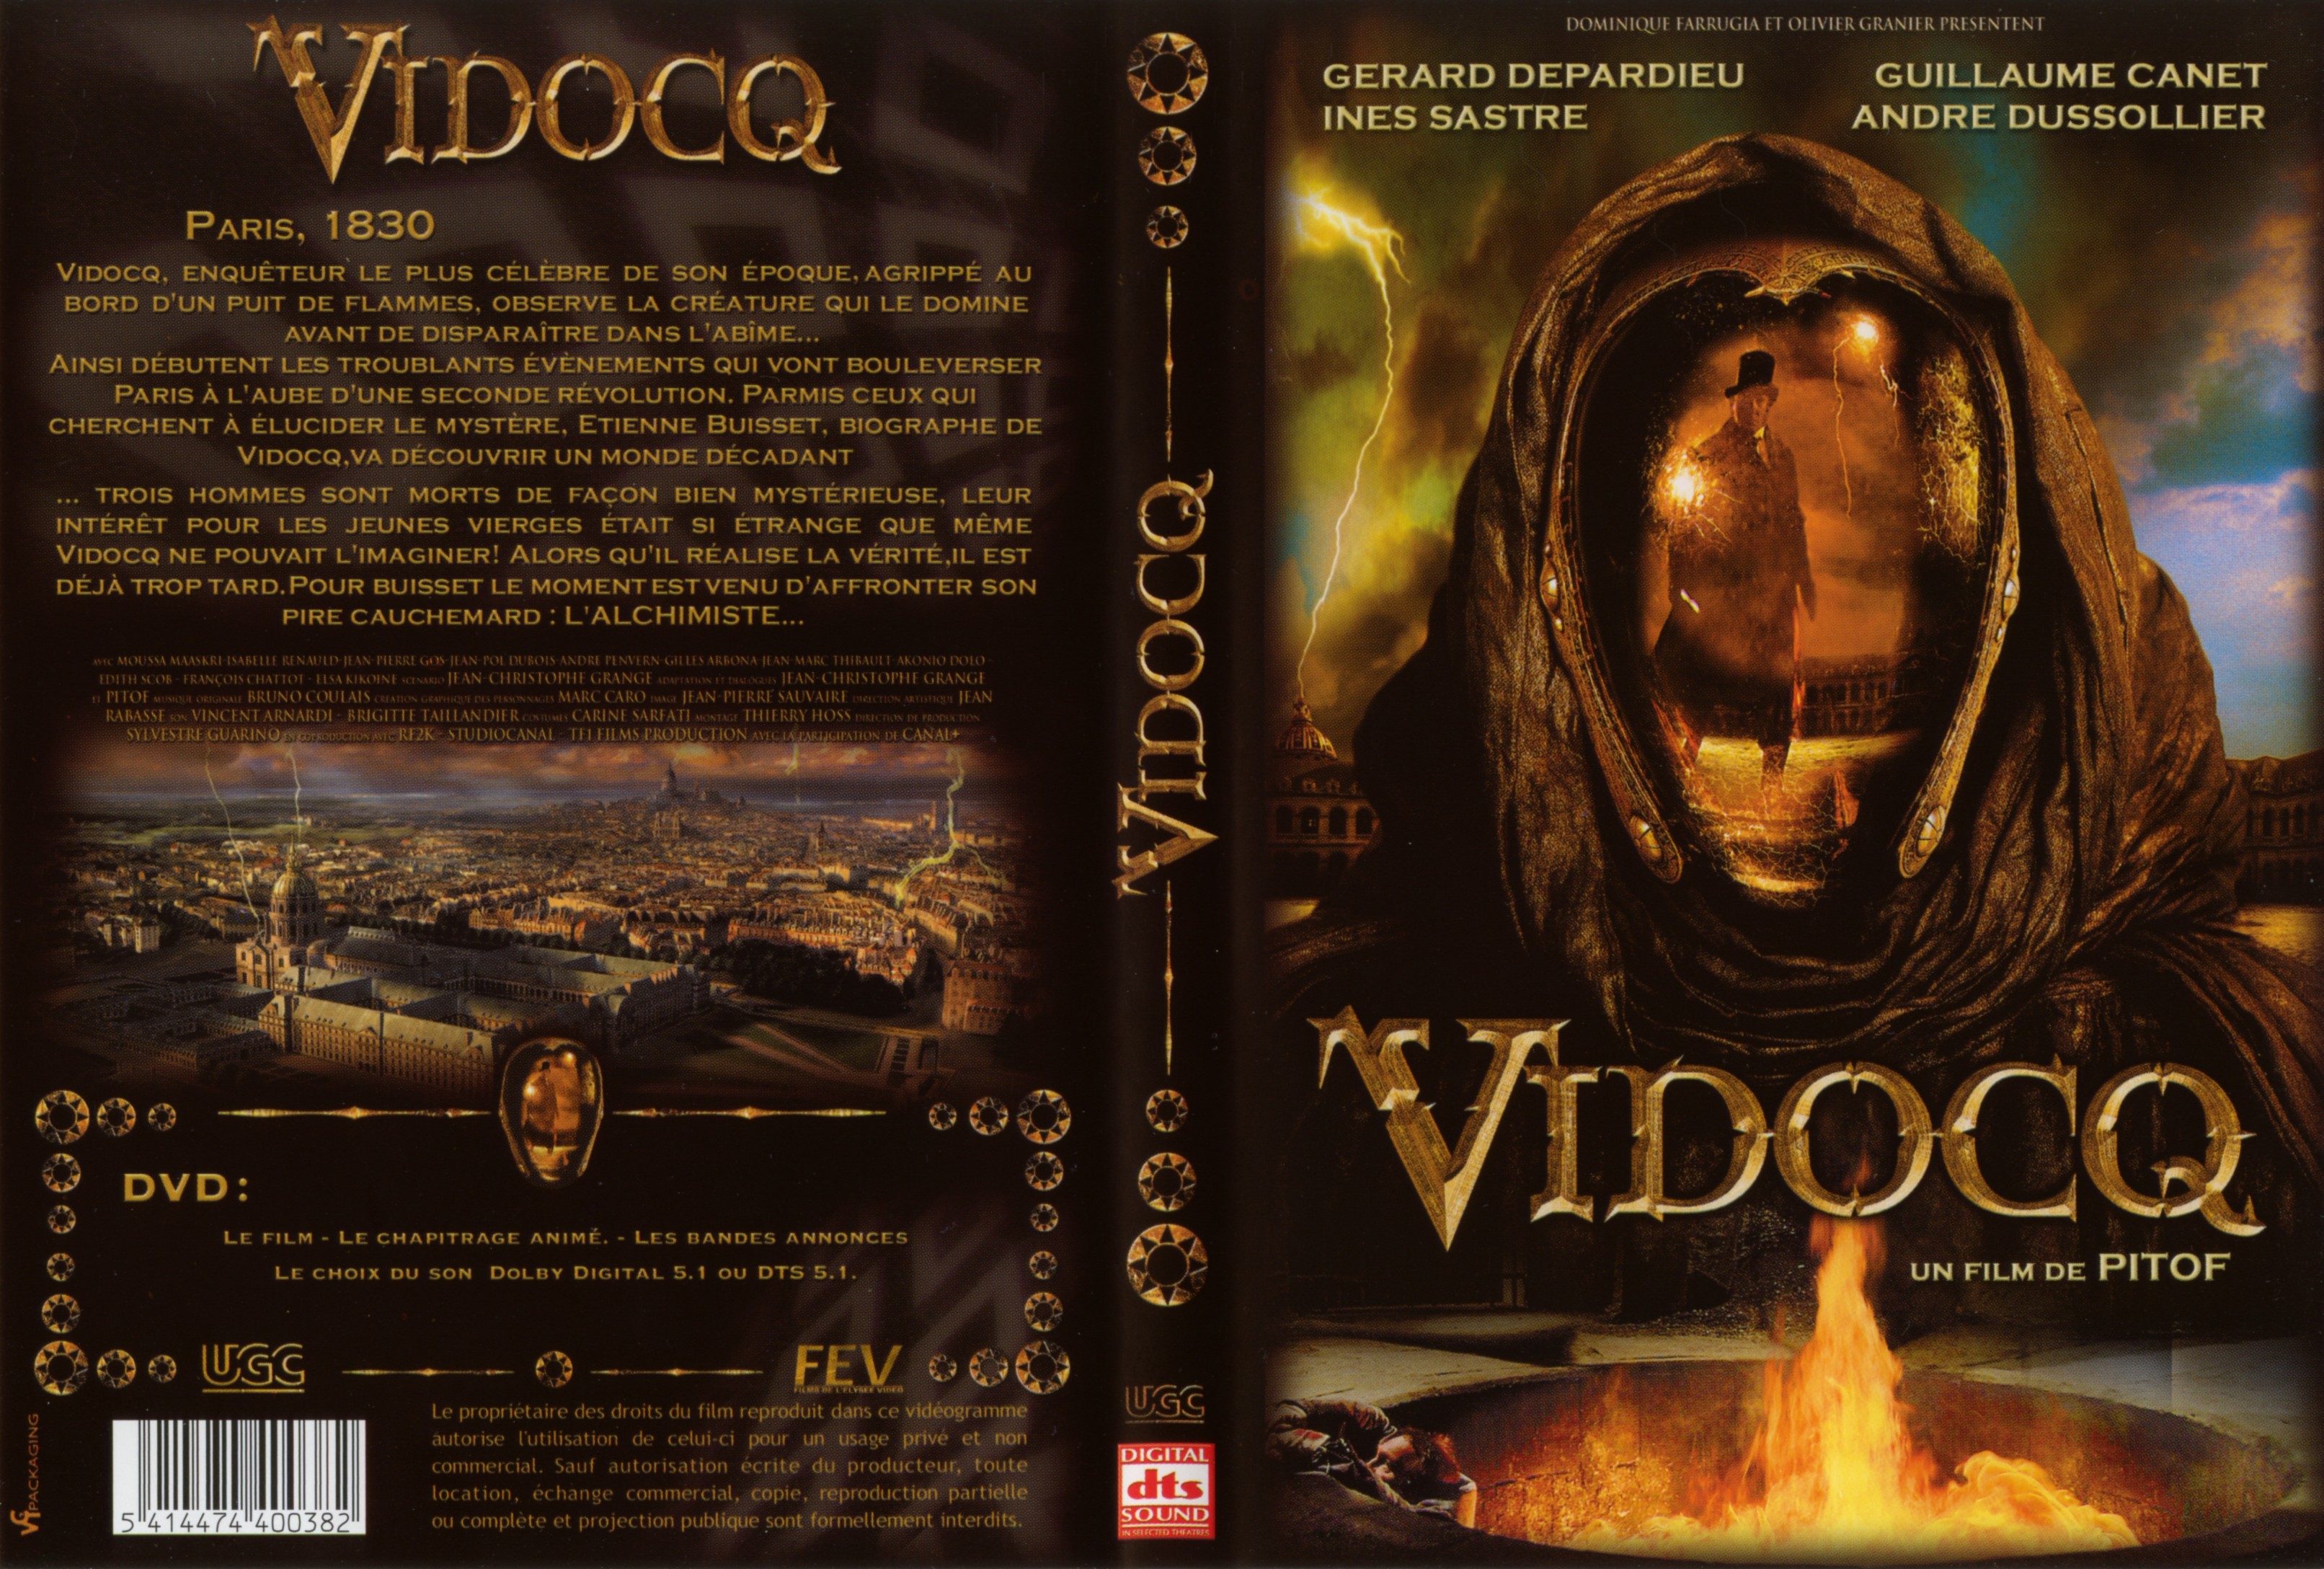 Jaquette DVD Vidocq